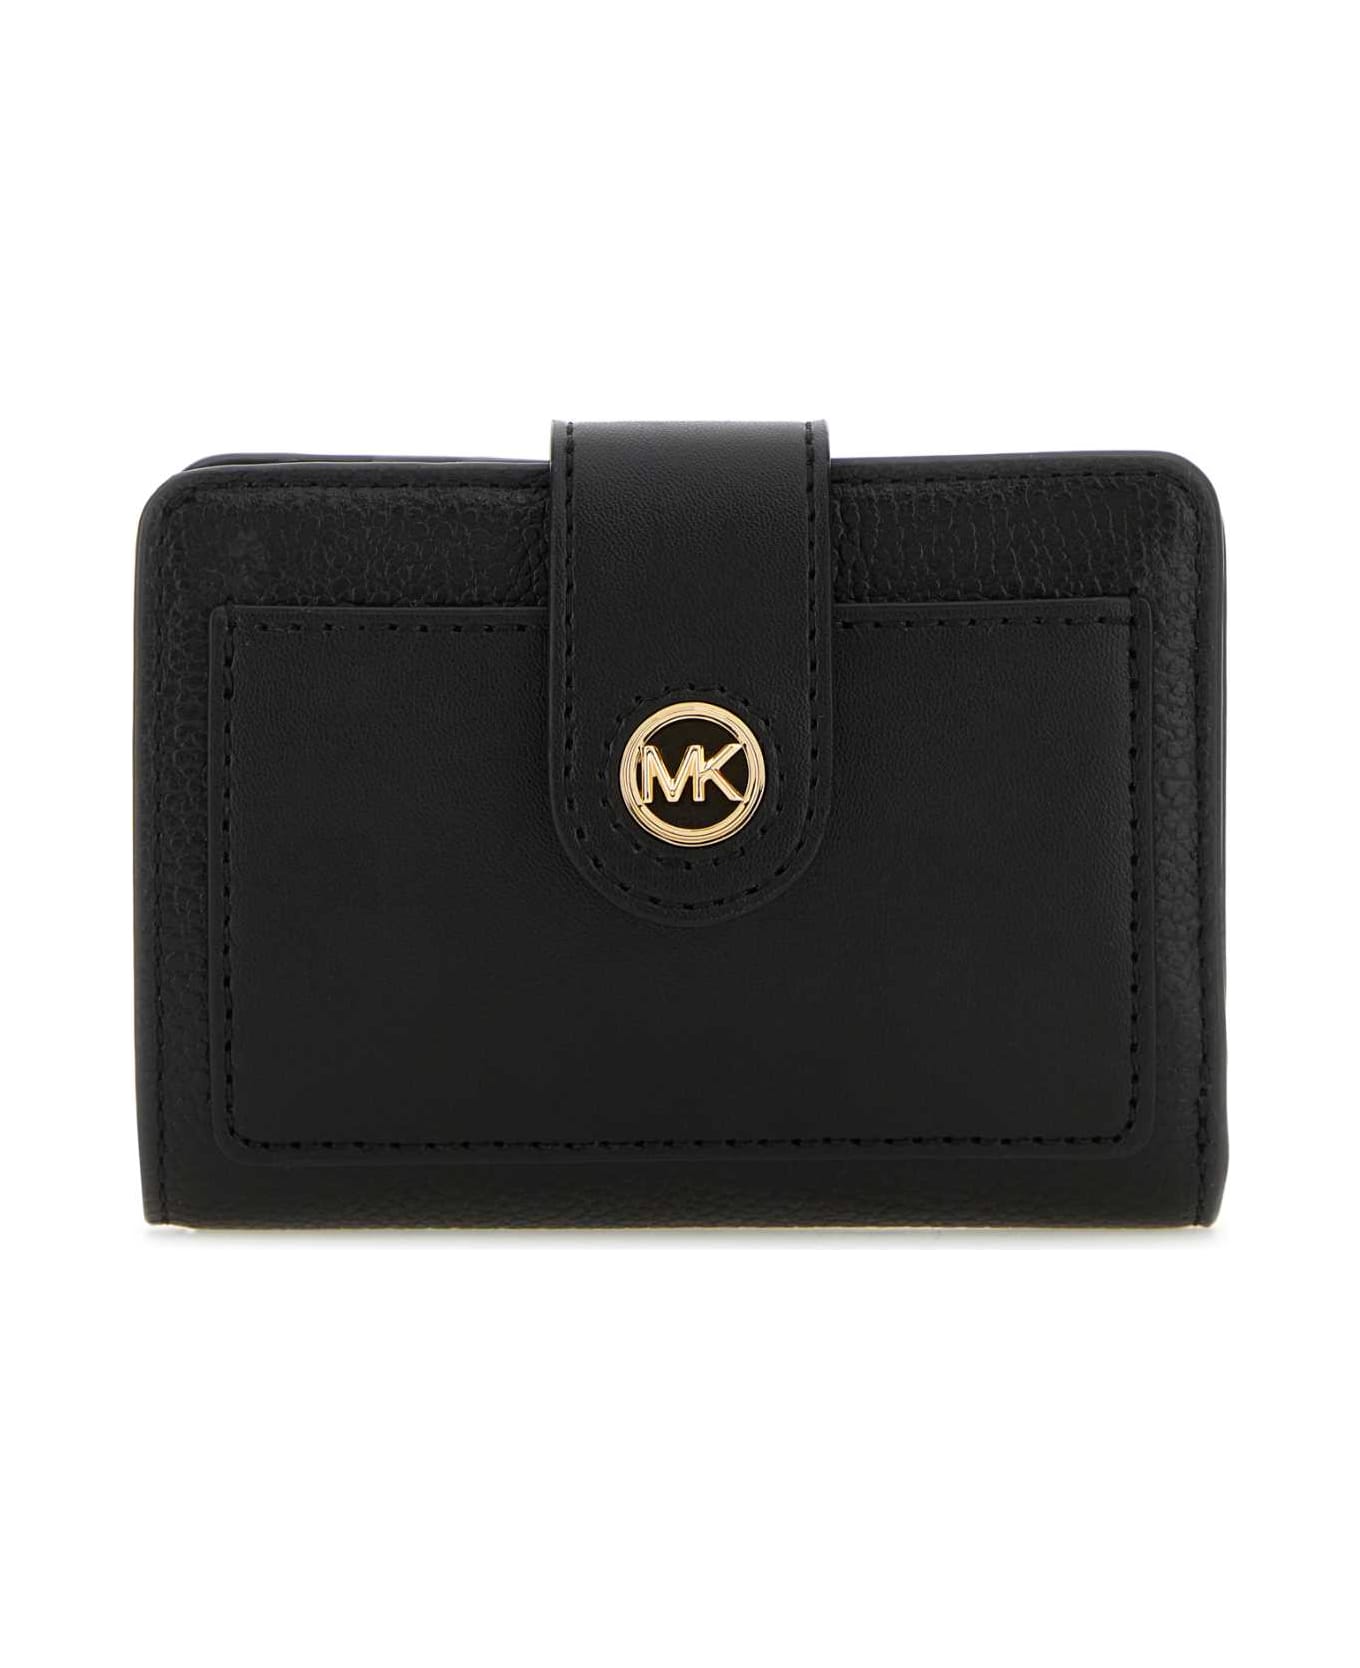 Michael Kors Black Leather Wallet - BLACK 財布